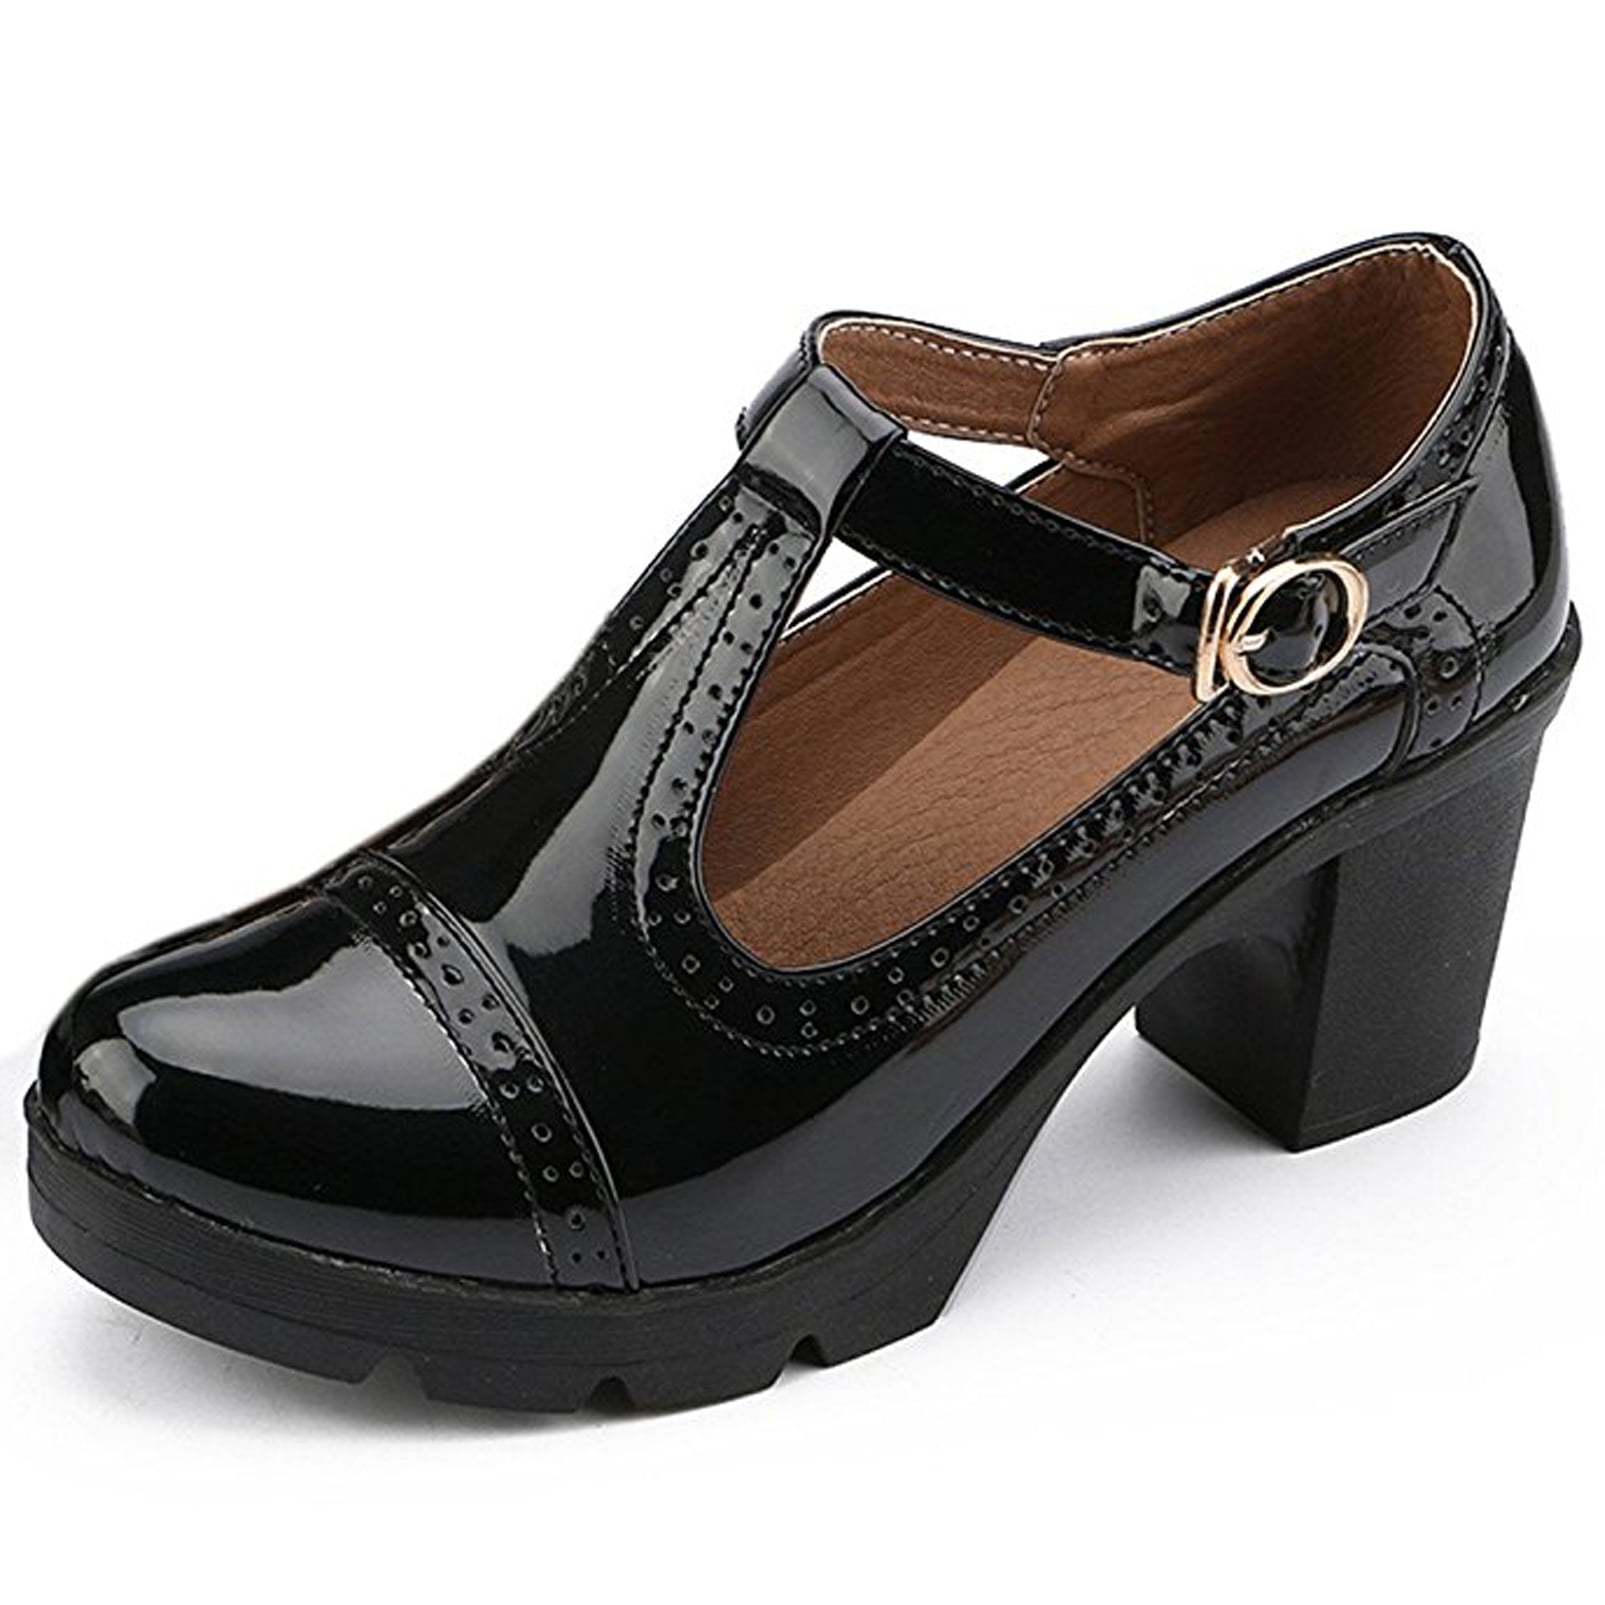 DADAWEN Women's Mary Jane Pumps Block Heel Platform Oxfords Leather ...